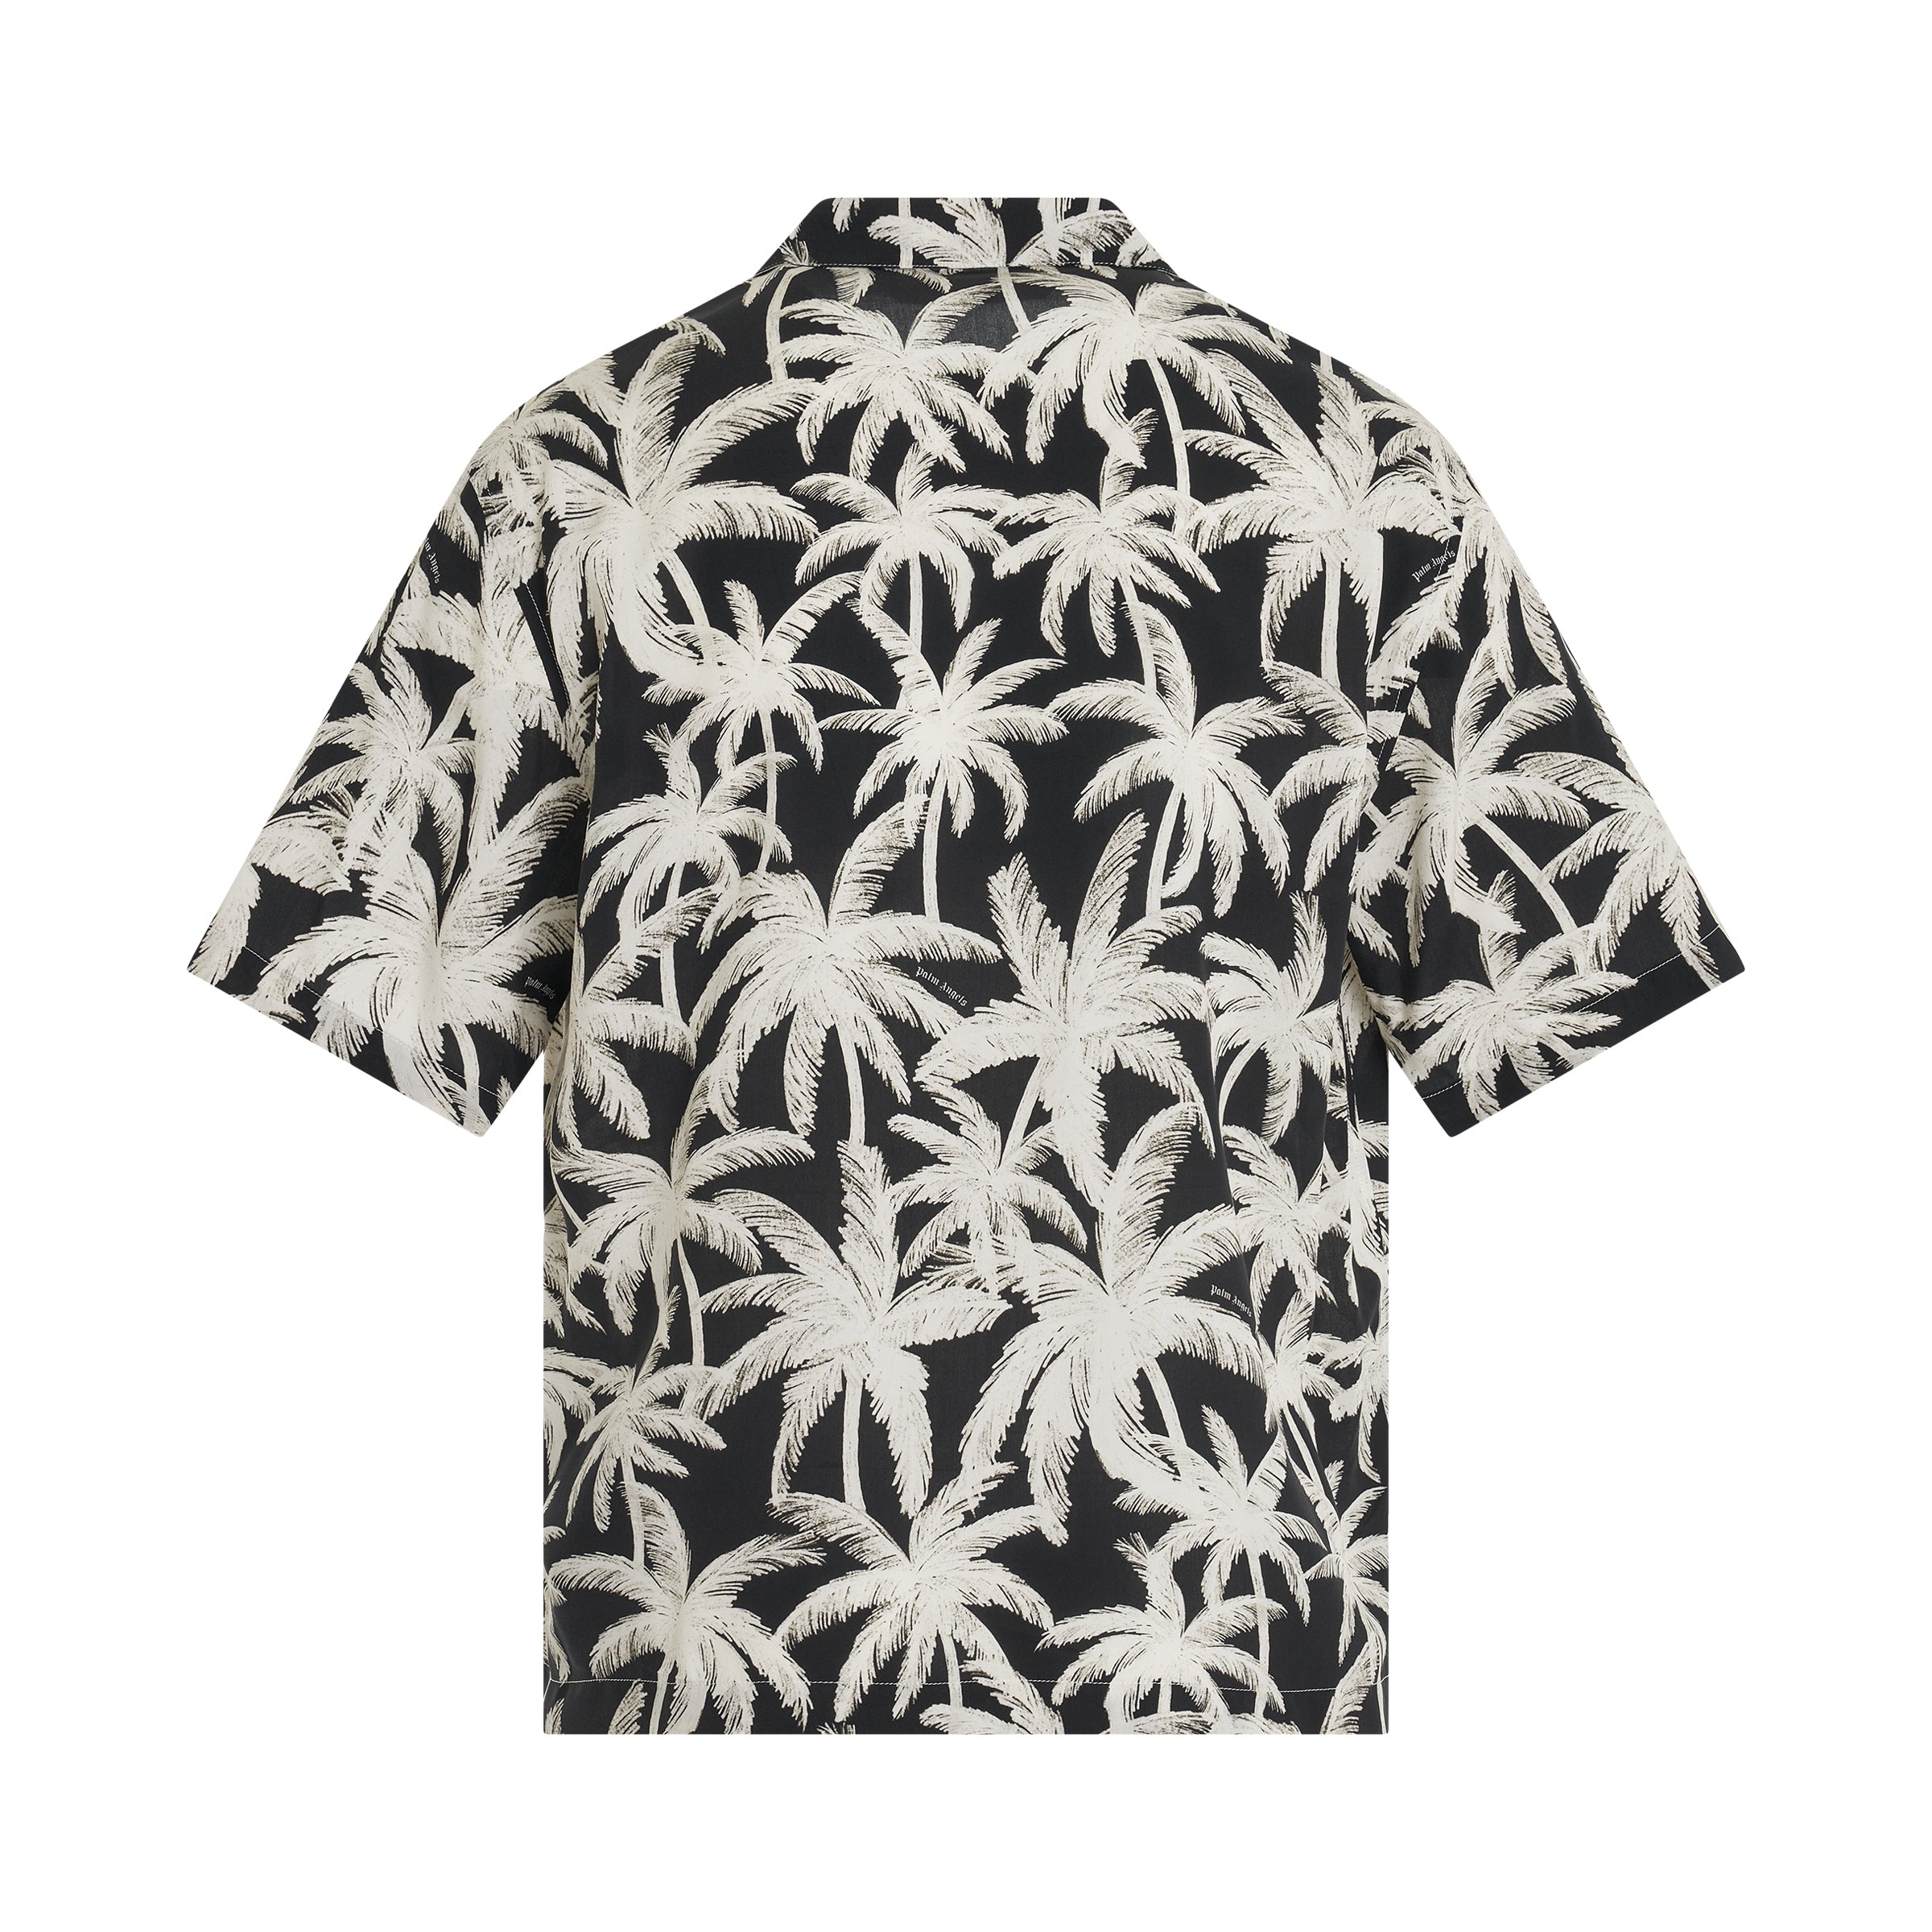 Palms Allover Short Sleeve Shirt in Black/Off White - 4